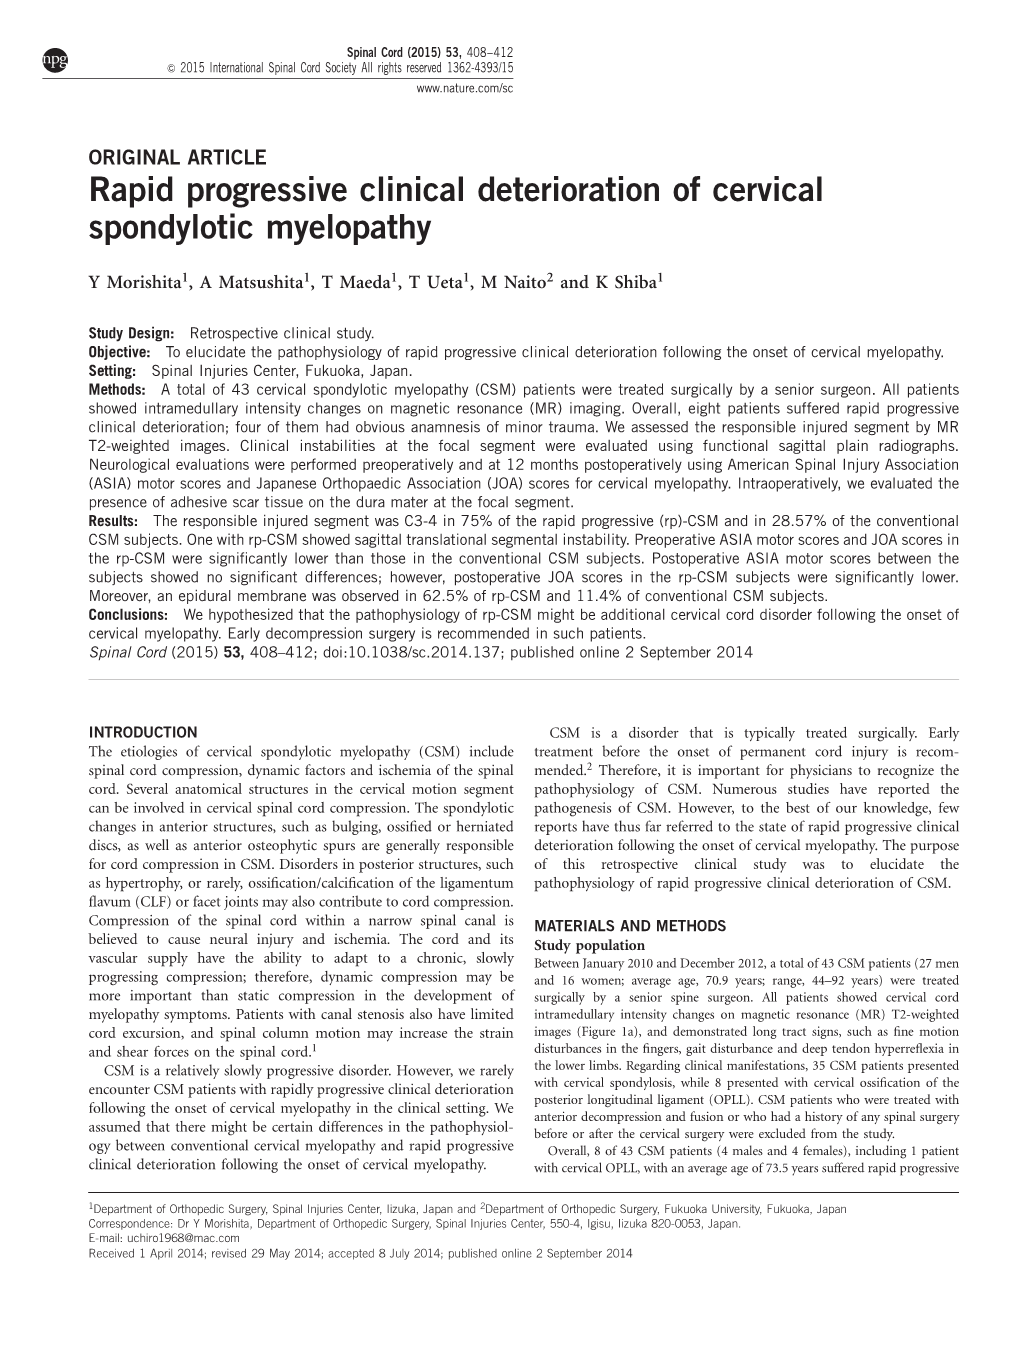 Rapid Progressive Clinical Deterioration of Cervical Spondylotic Myelopathy